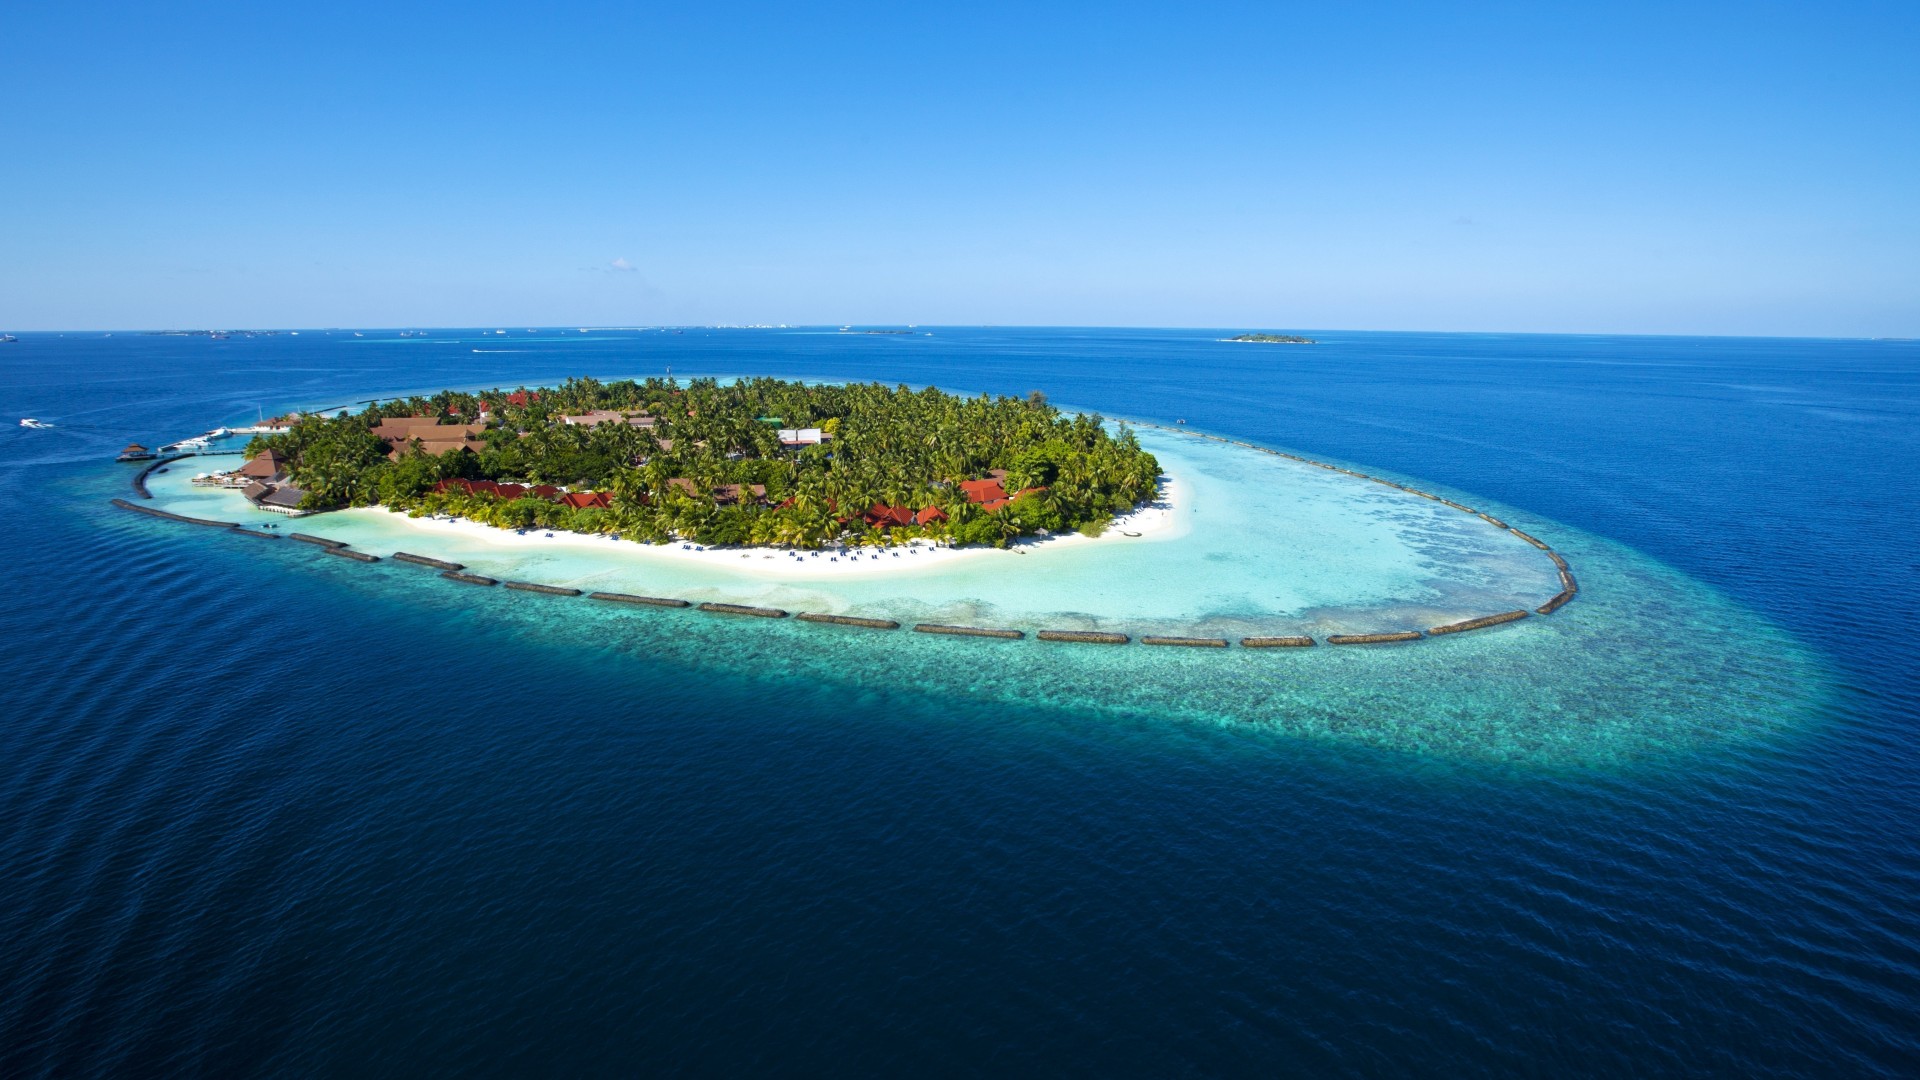 Download Maldives 5k 4k wallpaper holidays vacation travel hotel island